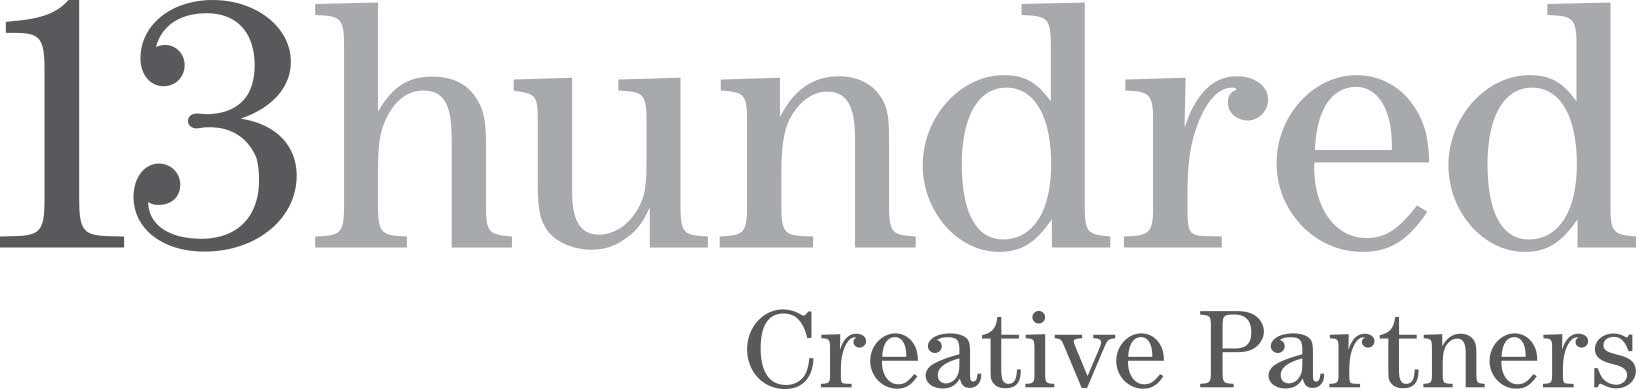 13hundred-Creative-Partners-Logo.jpg